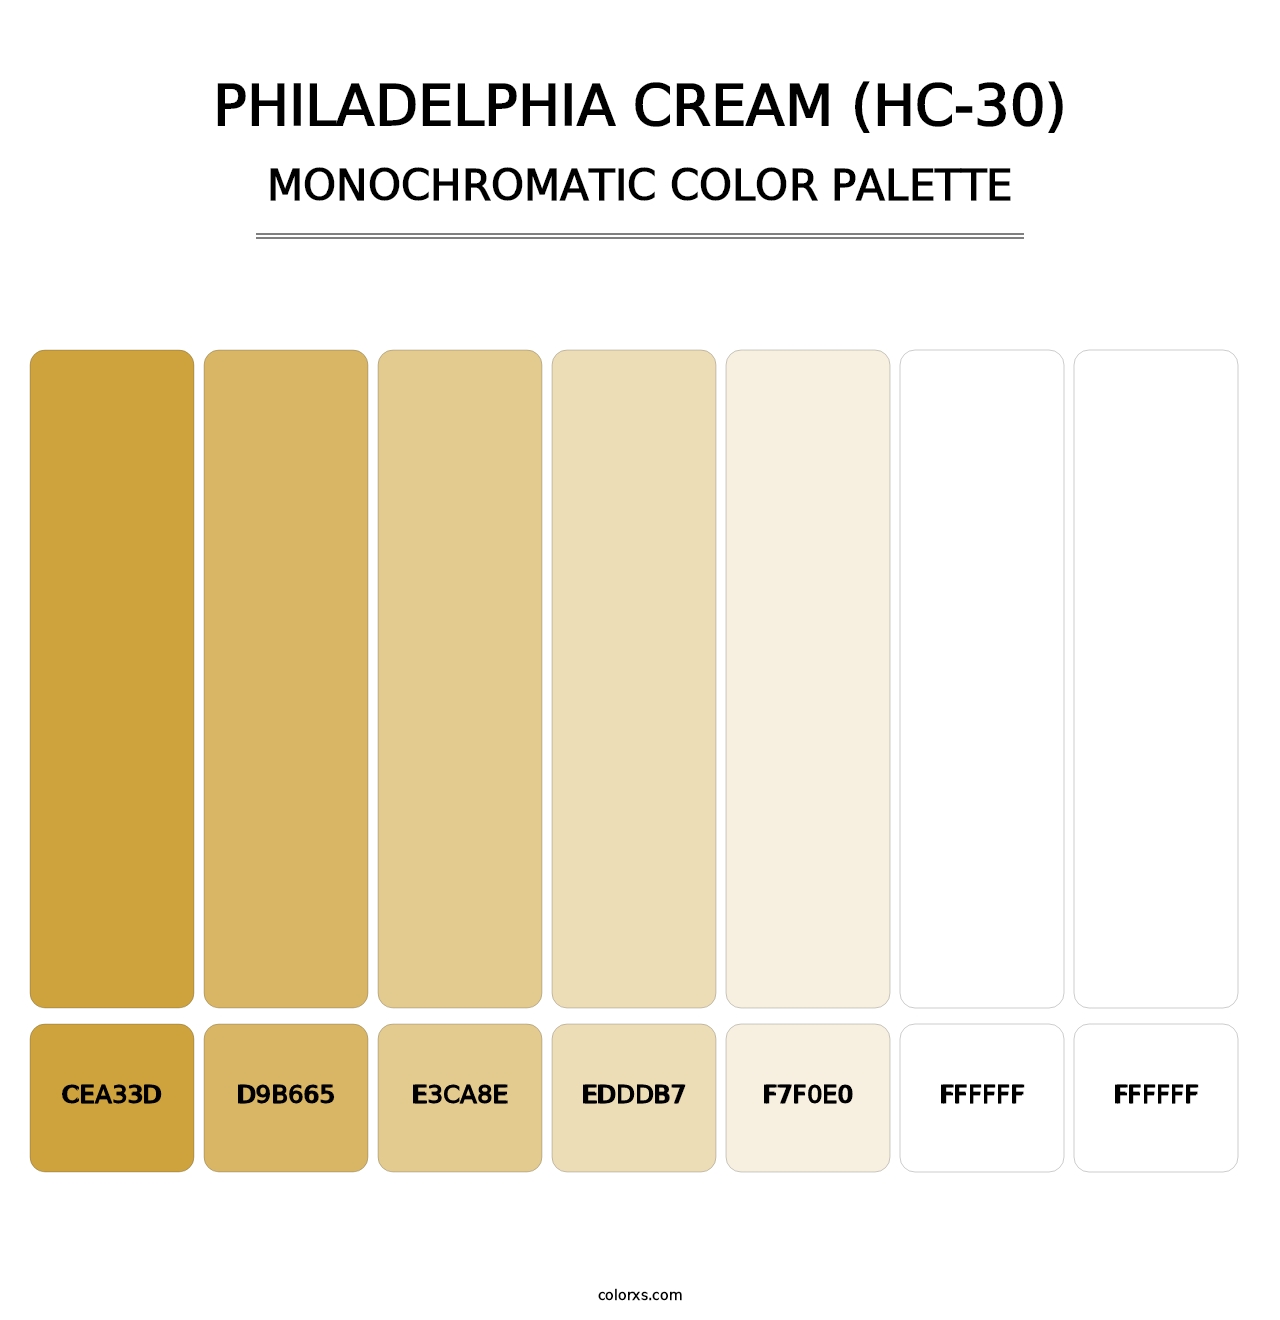 Philadelphia Cream (HC-30) - Monochromatic Color Palette